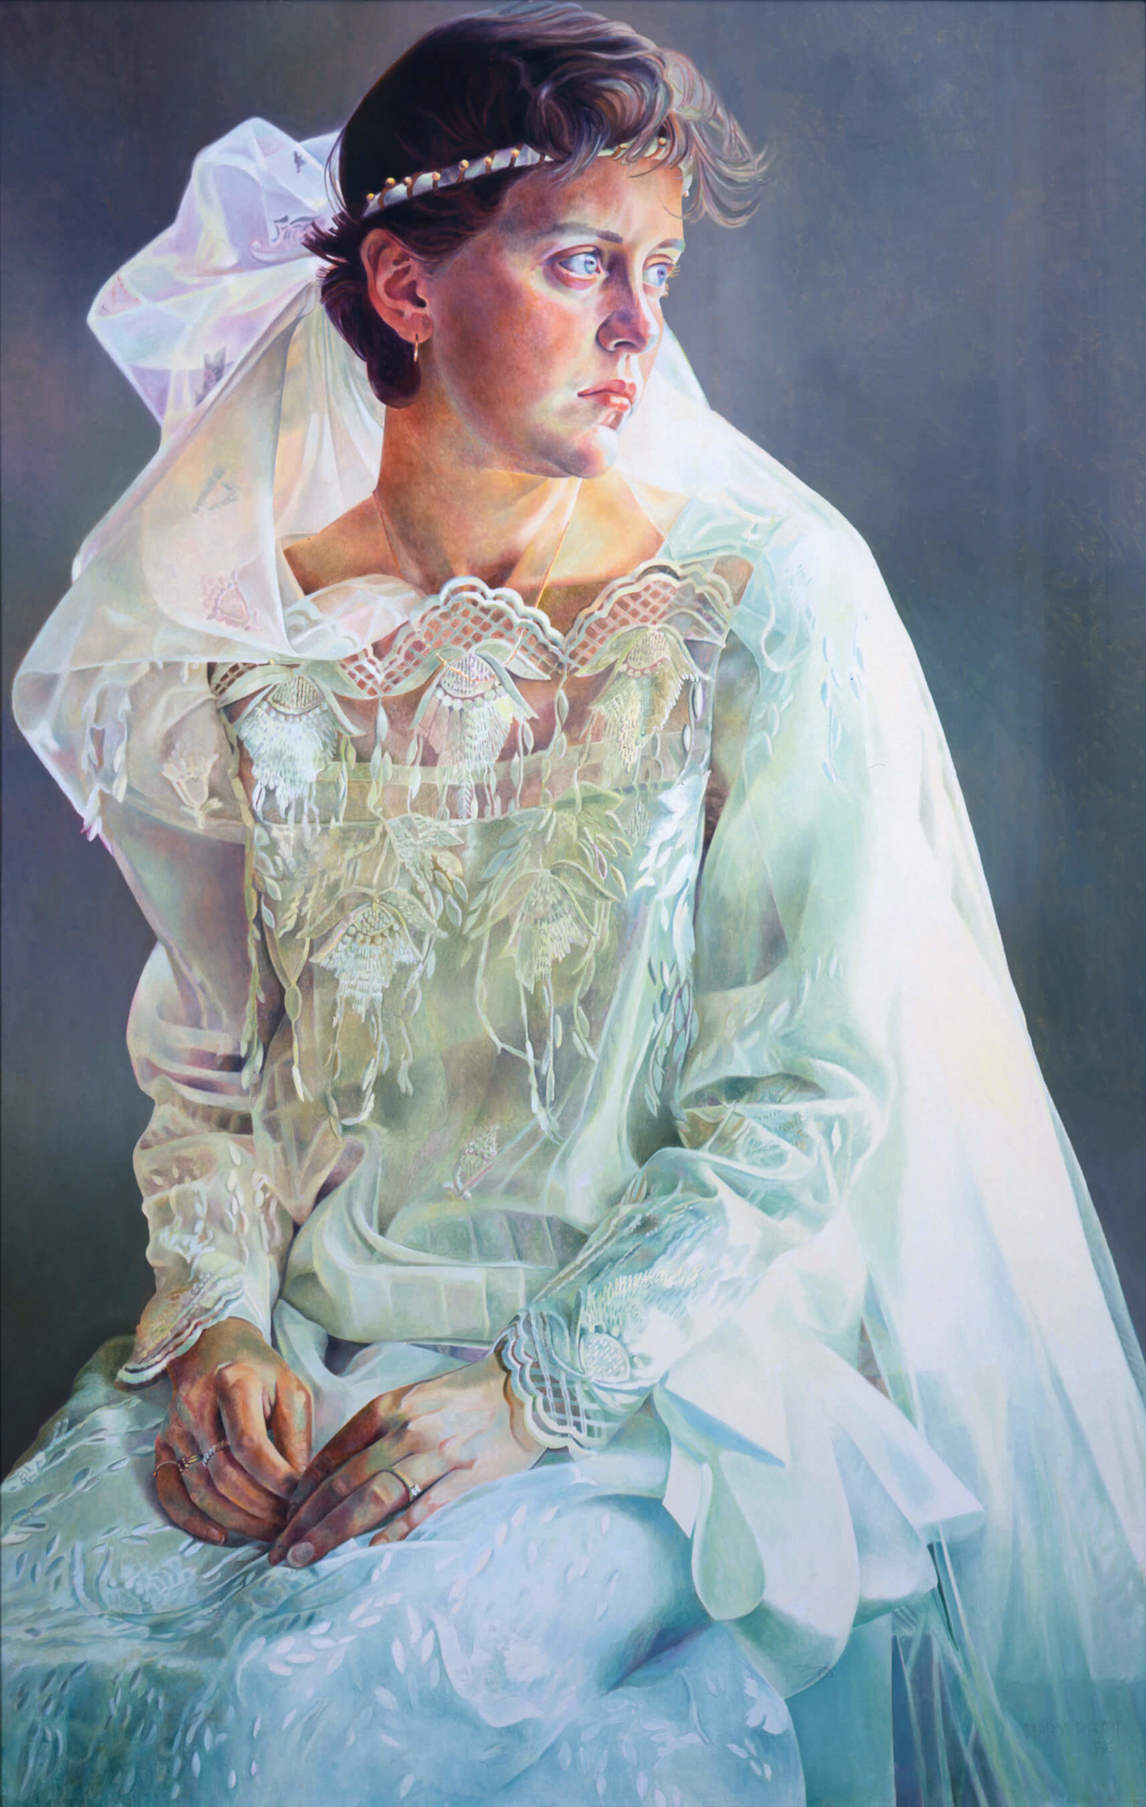 Mary Pratt, Barby in the Dress She Made Herself (Barby dans la robe qu’elle a faite elle-même), 1986